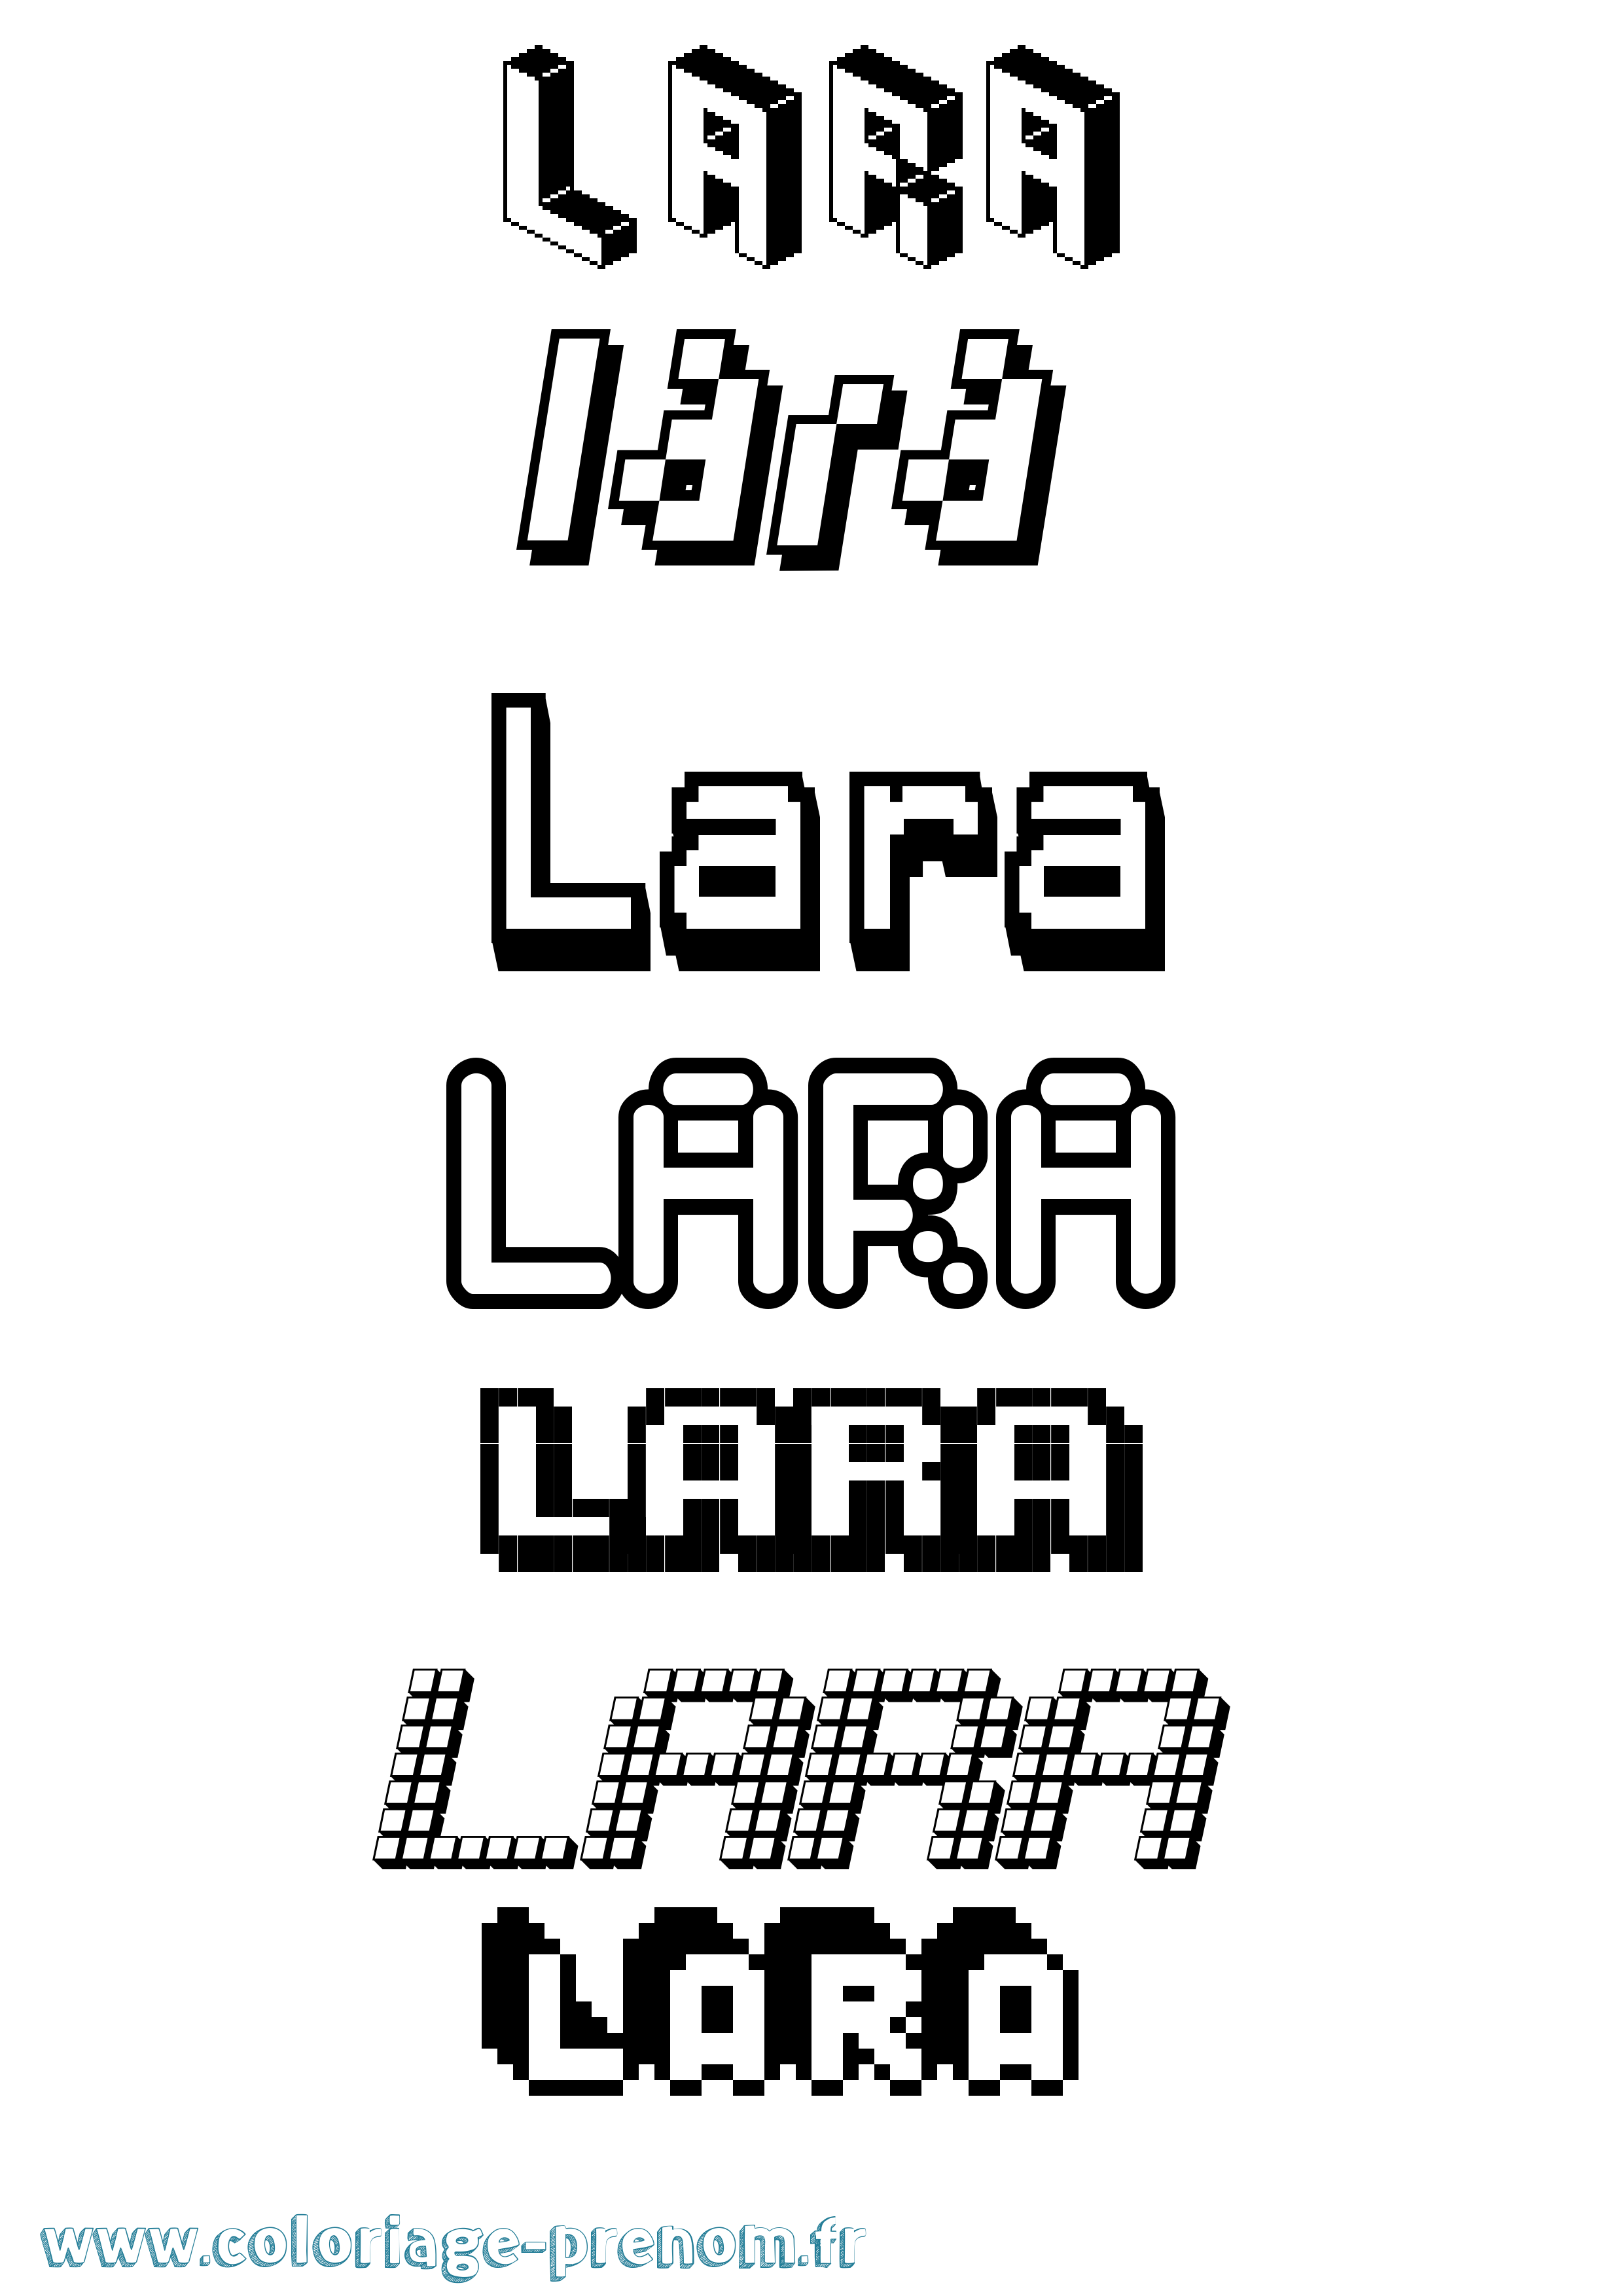 Coloriage prénom Lara Pixel